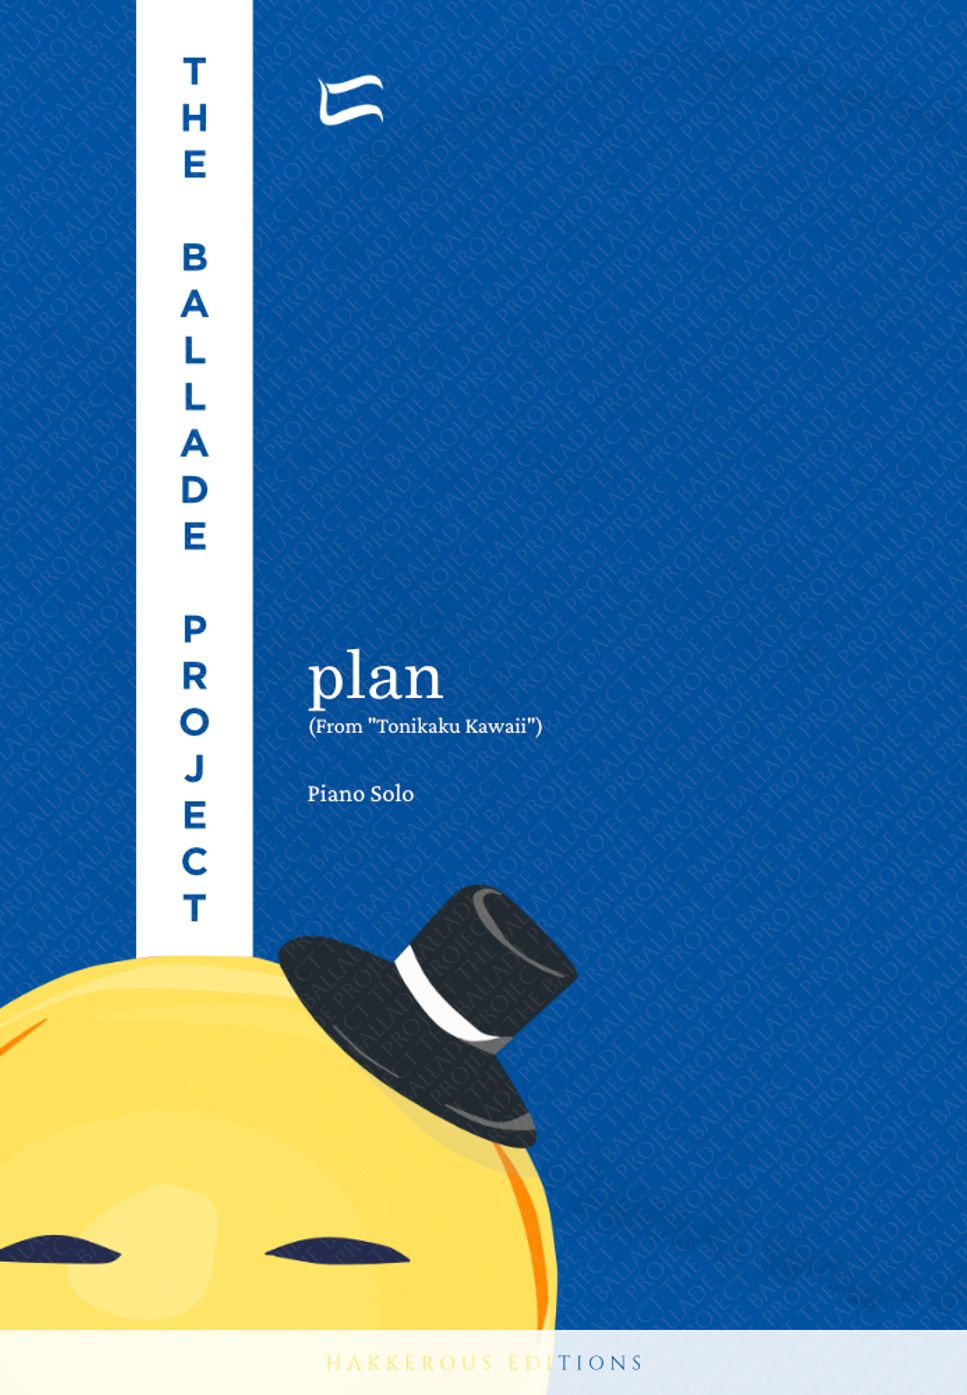 Saori Hayami - Plan by The Ballade Project